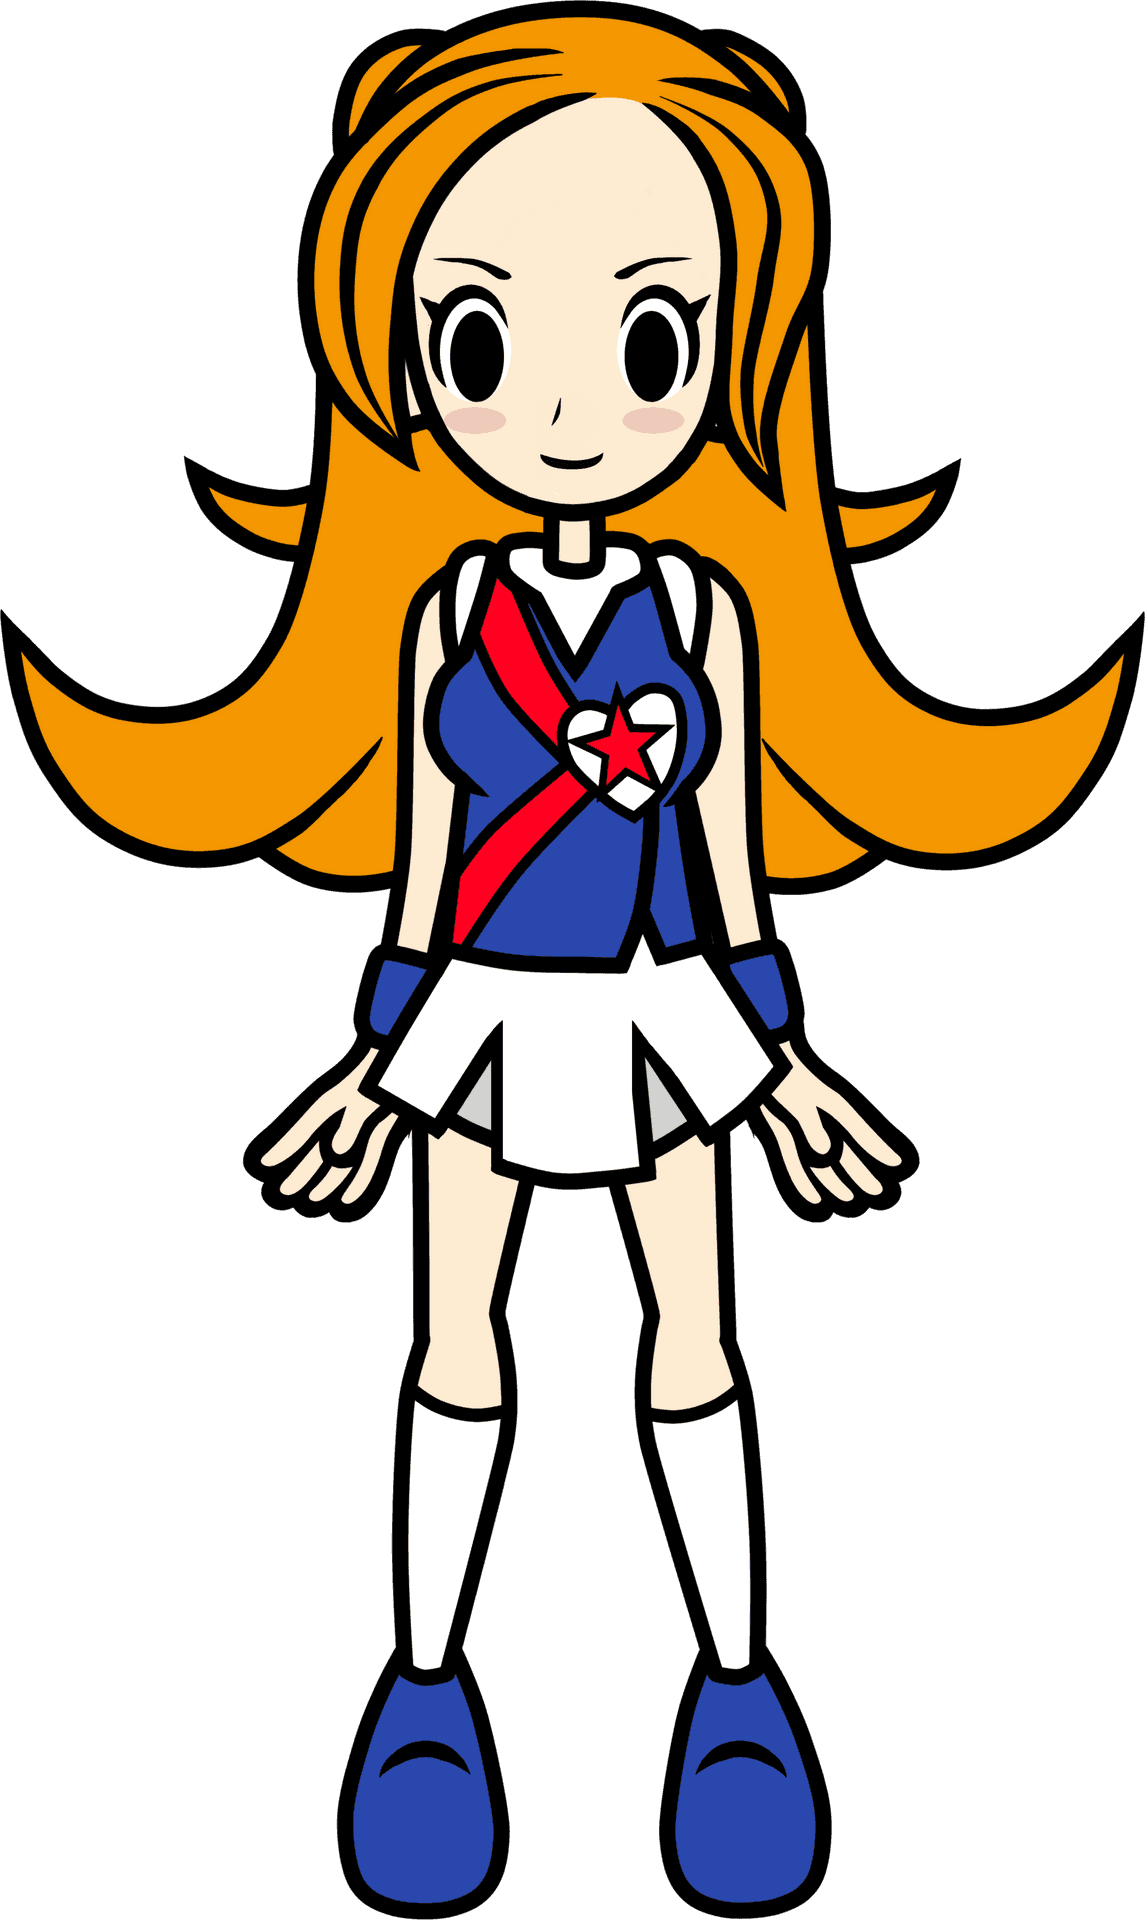 Animated Cheerleader Character PNG image